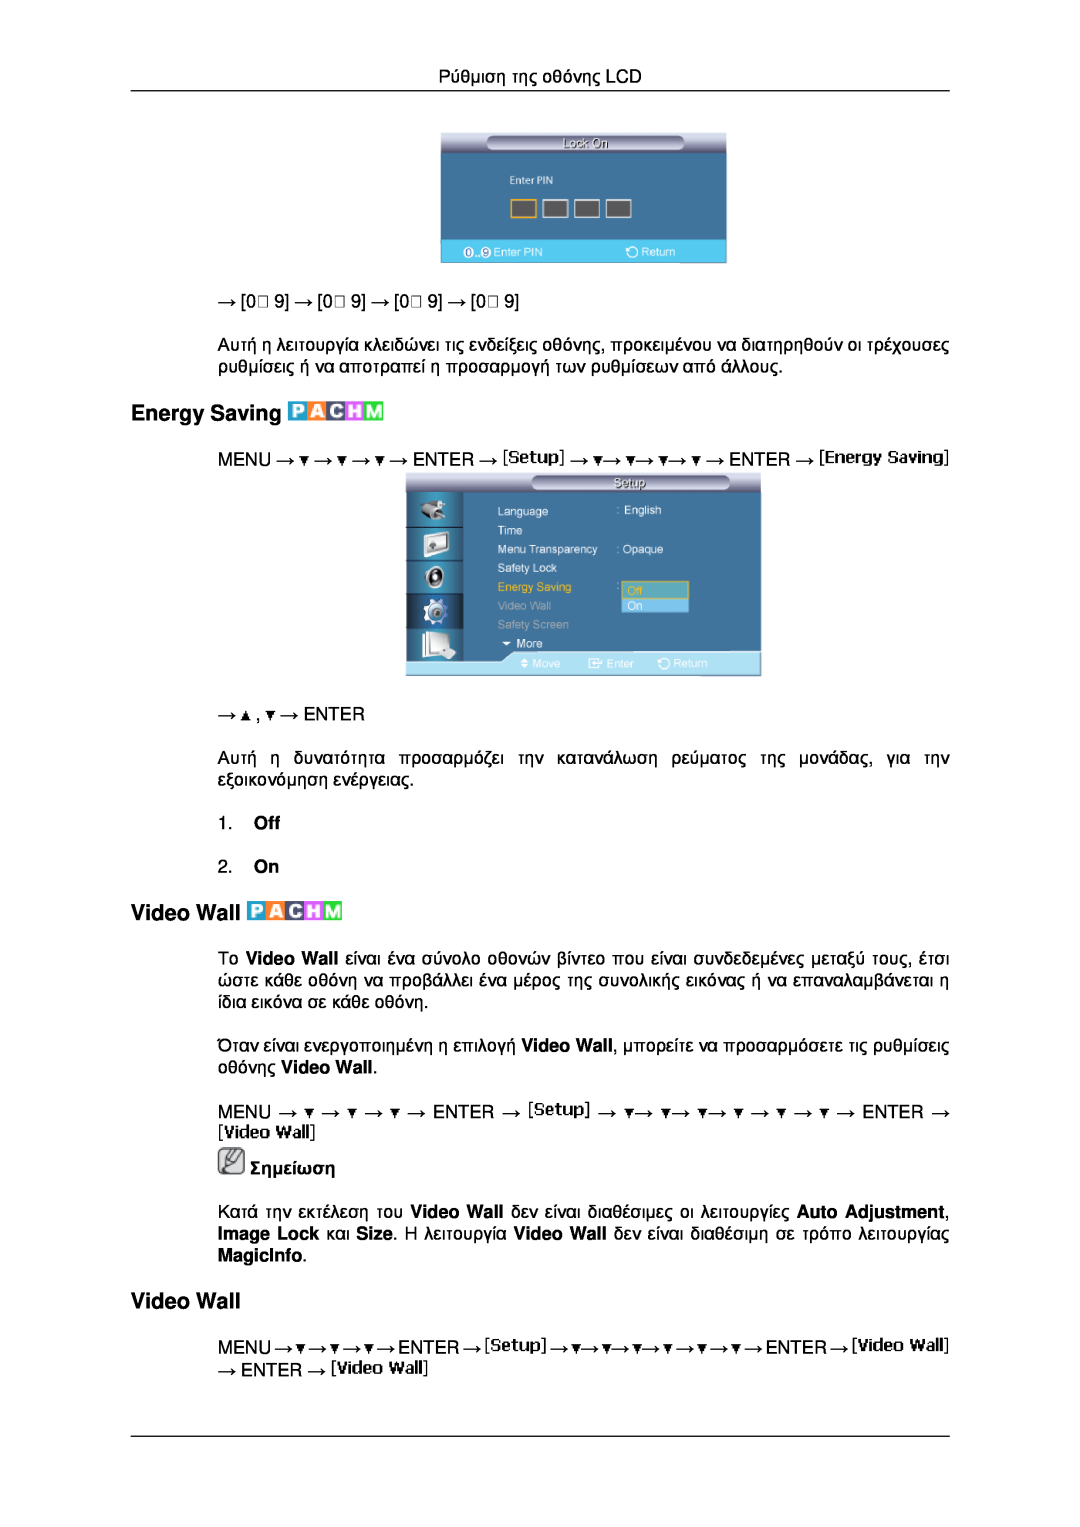 Samsung LH40MRPLBF/EN, LH46MRPLBF/EN, LH40MRTLBC/EN, LH46MRTLBC/EN manual Energy Saving, Video Wall, Off 2. On, Σημείωση 